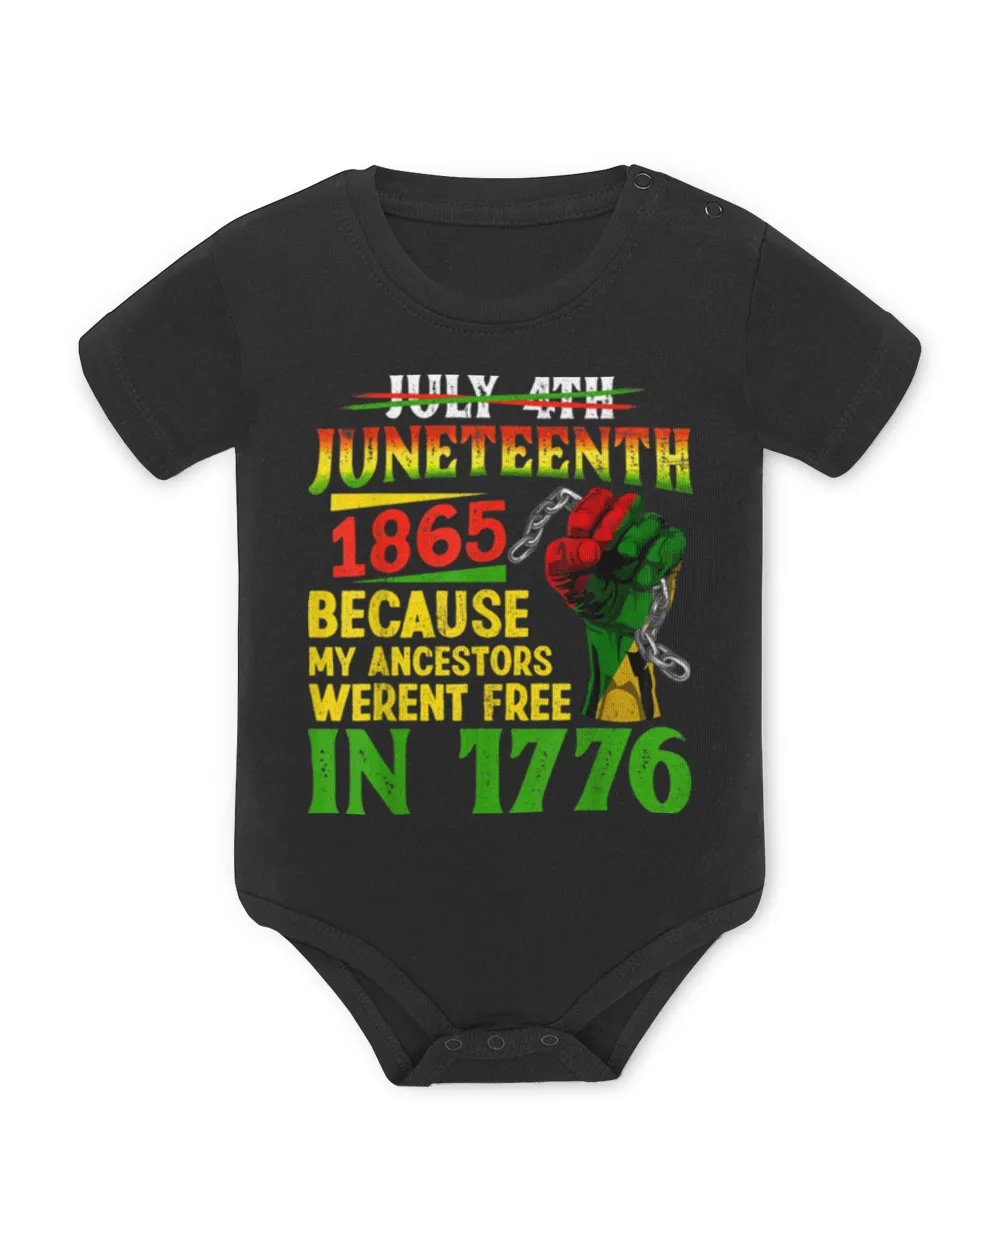 July 4th Juneteenth 1865 Because My Ancestors T-Shirts tee